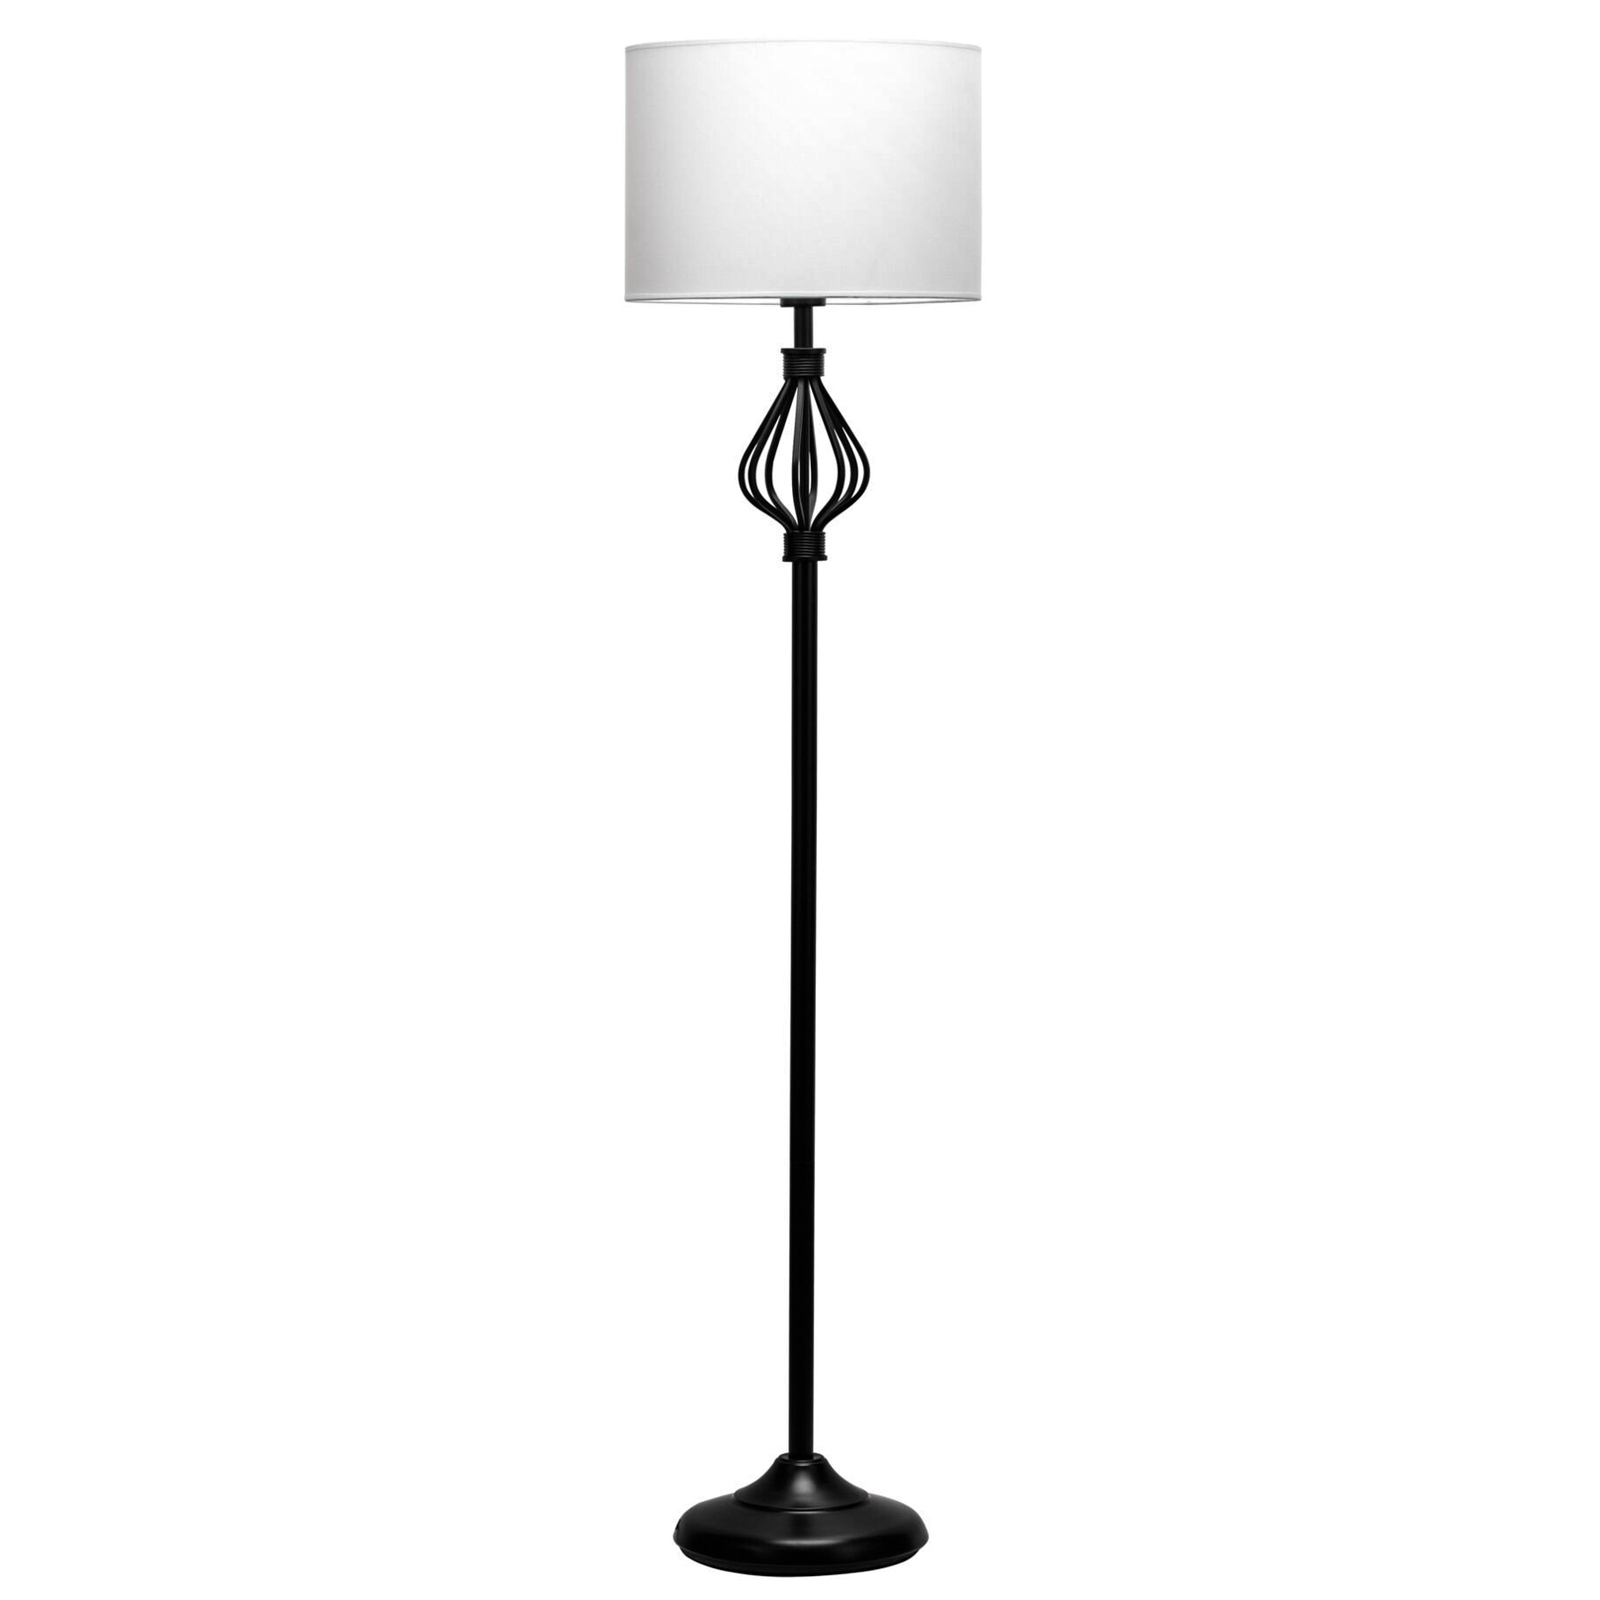 Pauleen Grand Beauty lampadaire design classique